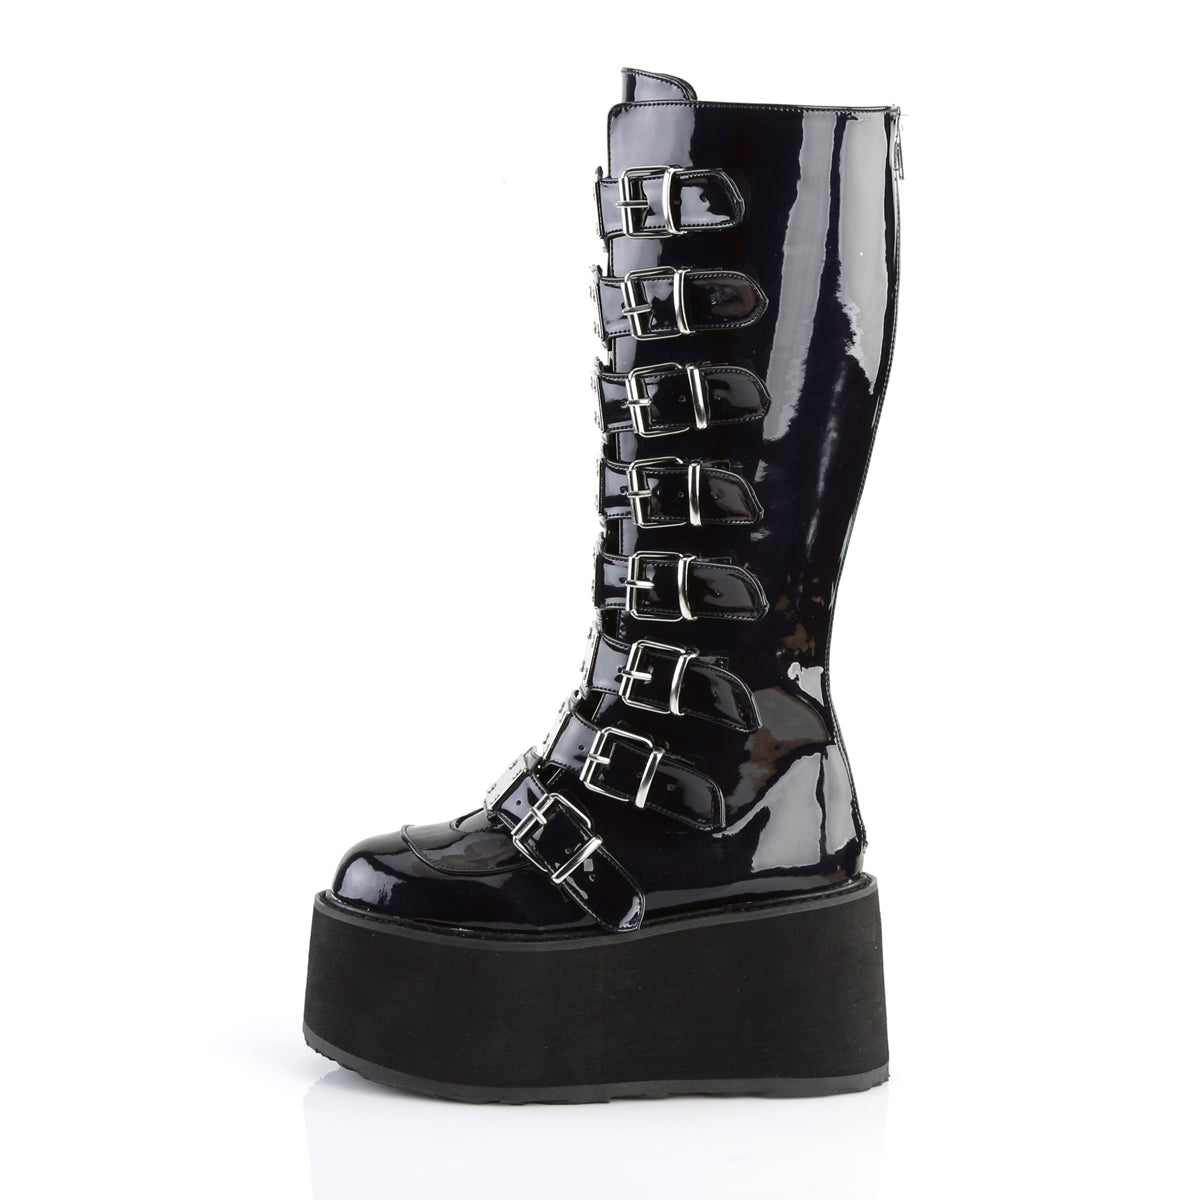 DAMNED-318 Demonia Black Hologram Vegan Leather Women's Mid-Calf & Knee High Boots [Demonia Cult Alternative Footwear]